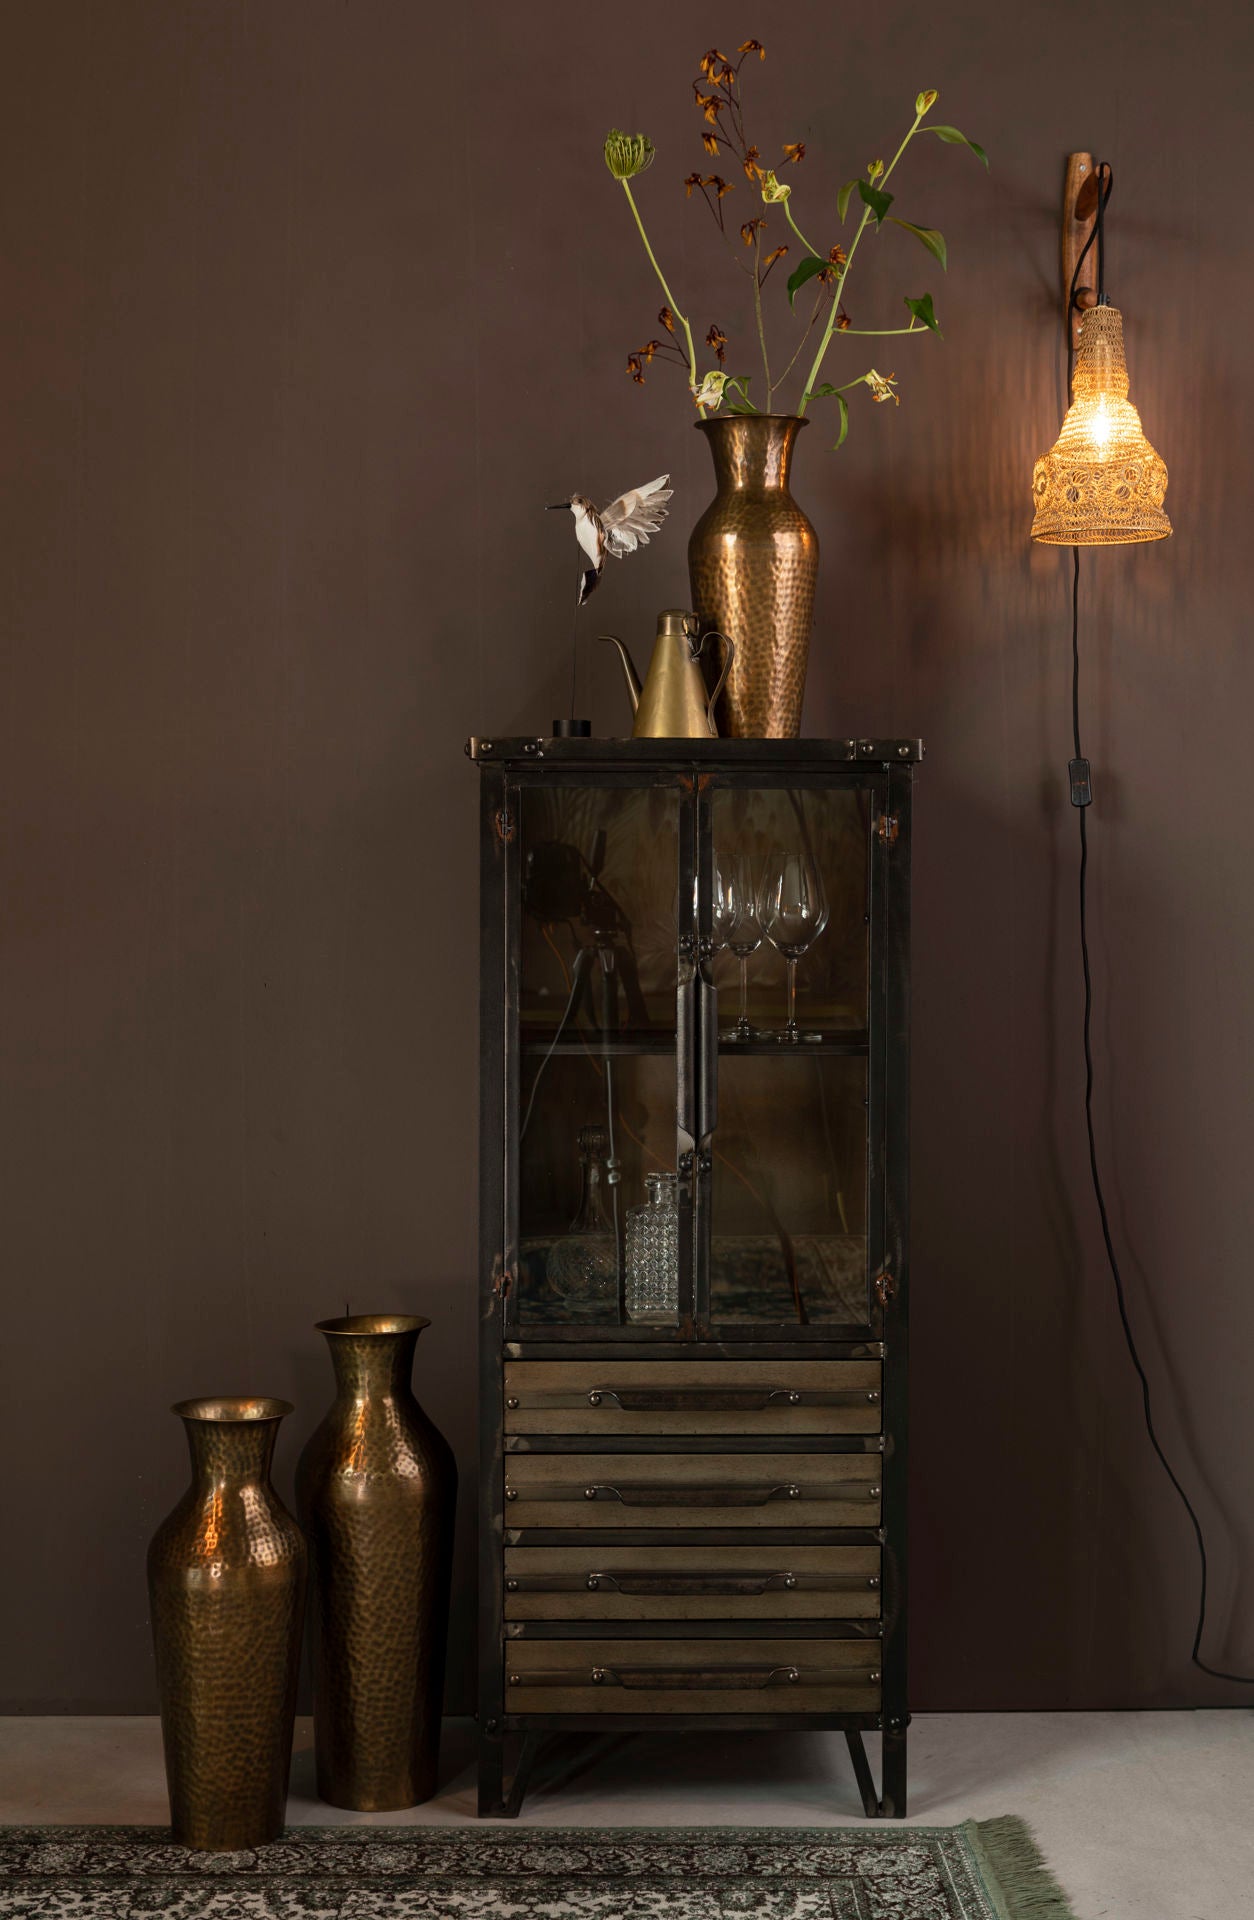 Nancy's Pleasant View Wall Lamp - Modern - Brown, Natural, Black - Iron, Mango Wood, Polyester - 18 cm x 17 cm x 47 cm